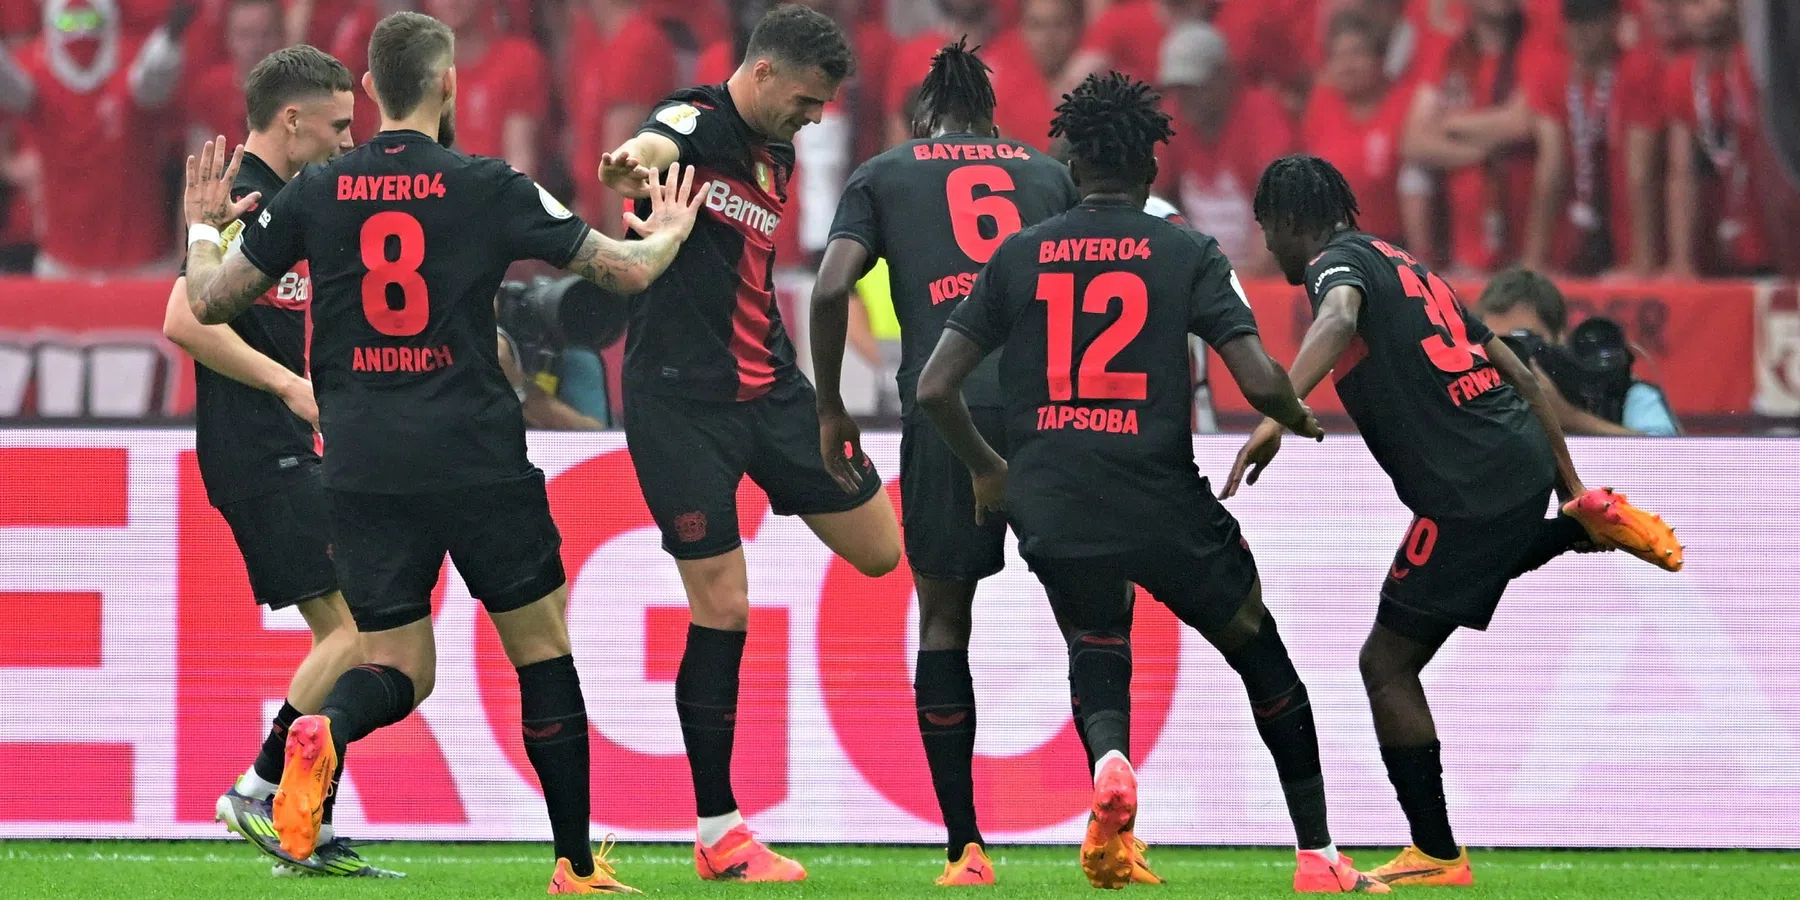 Tiental Leverkusen richt zich op tegen stuntploeg Kaiserslautern: dubbel een feit